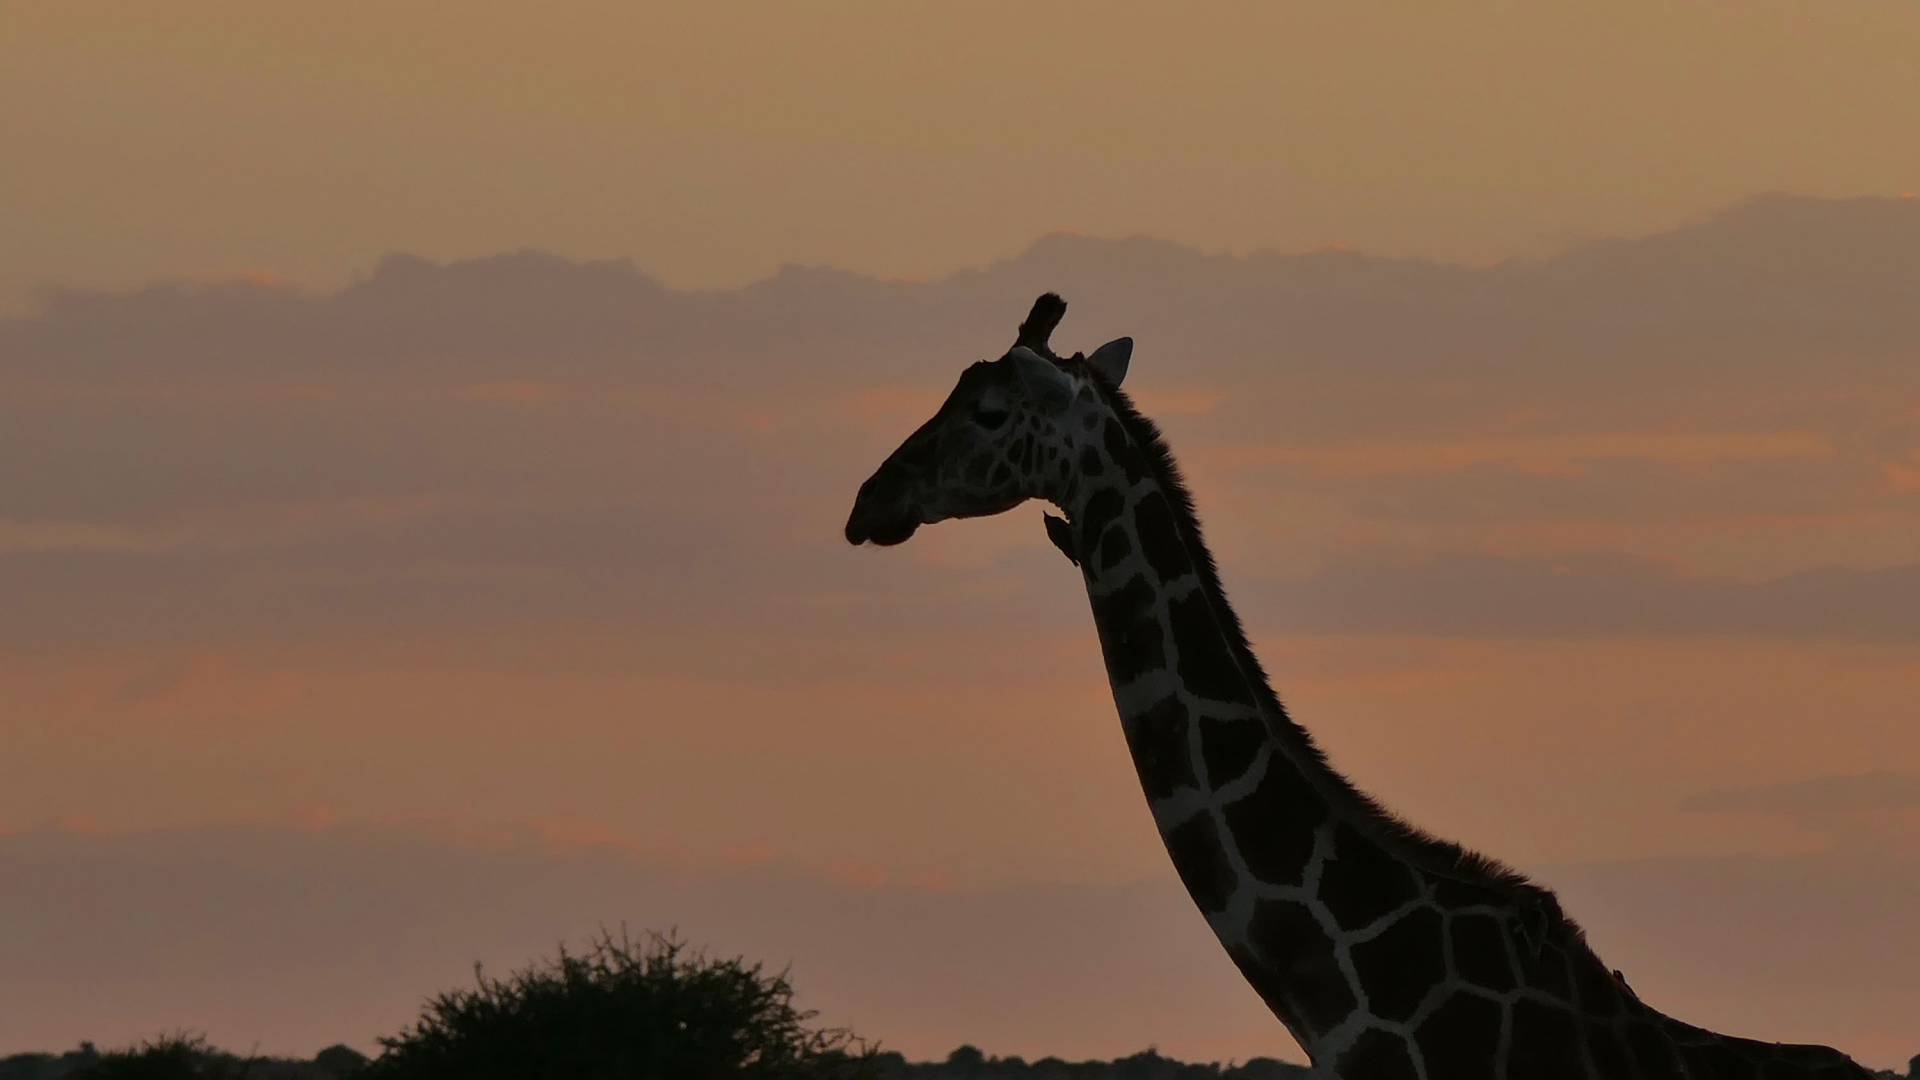 A giraffe moves across the landscape at dusk